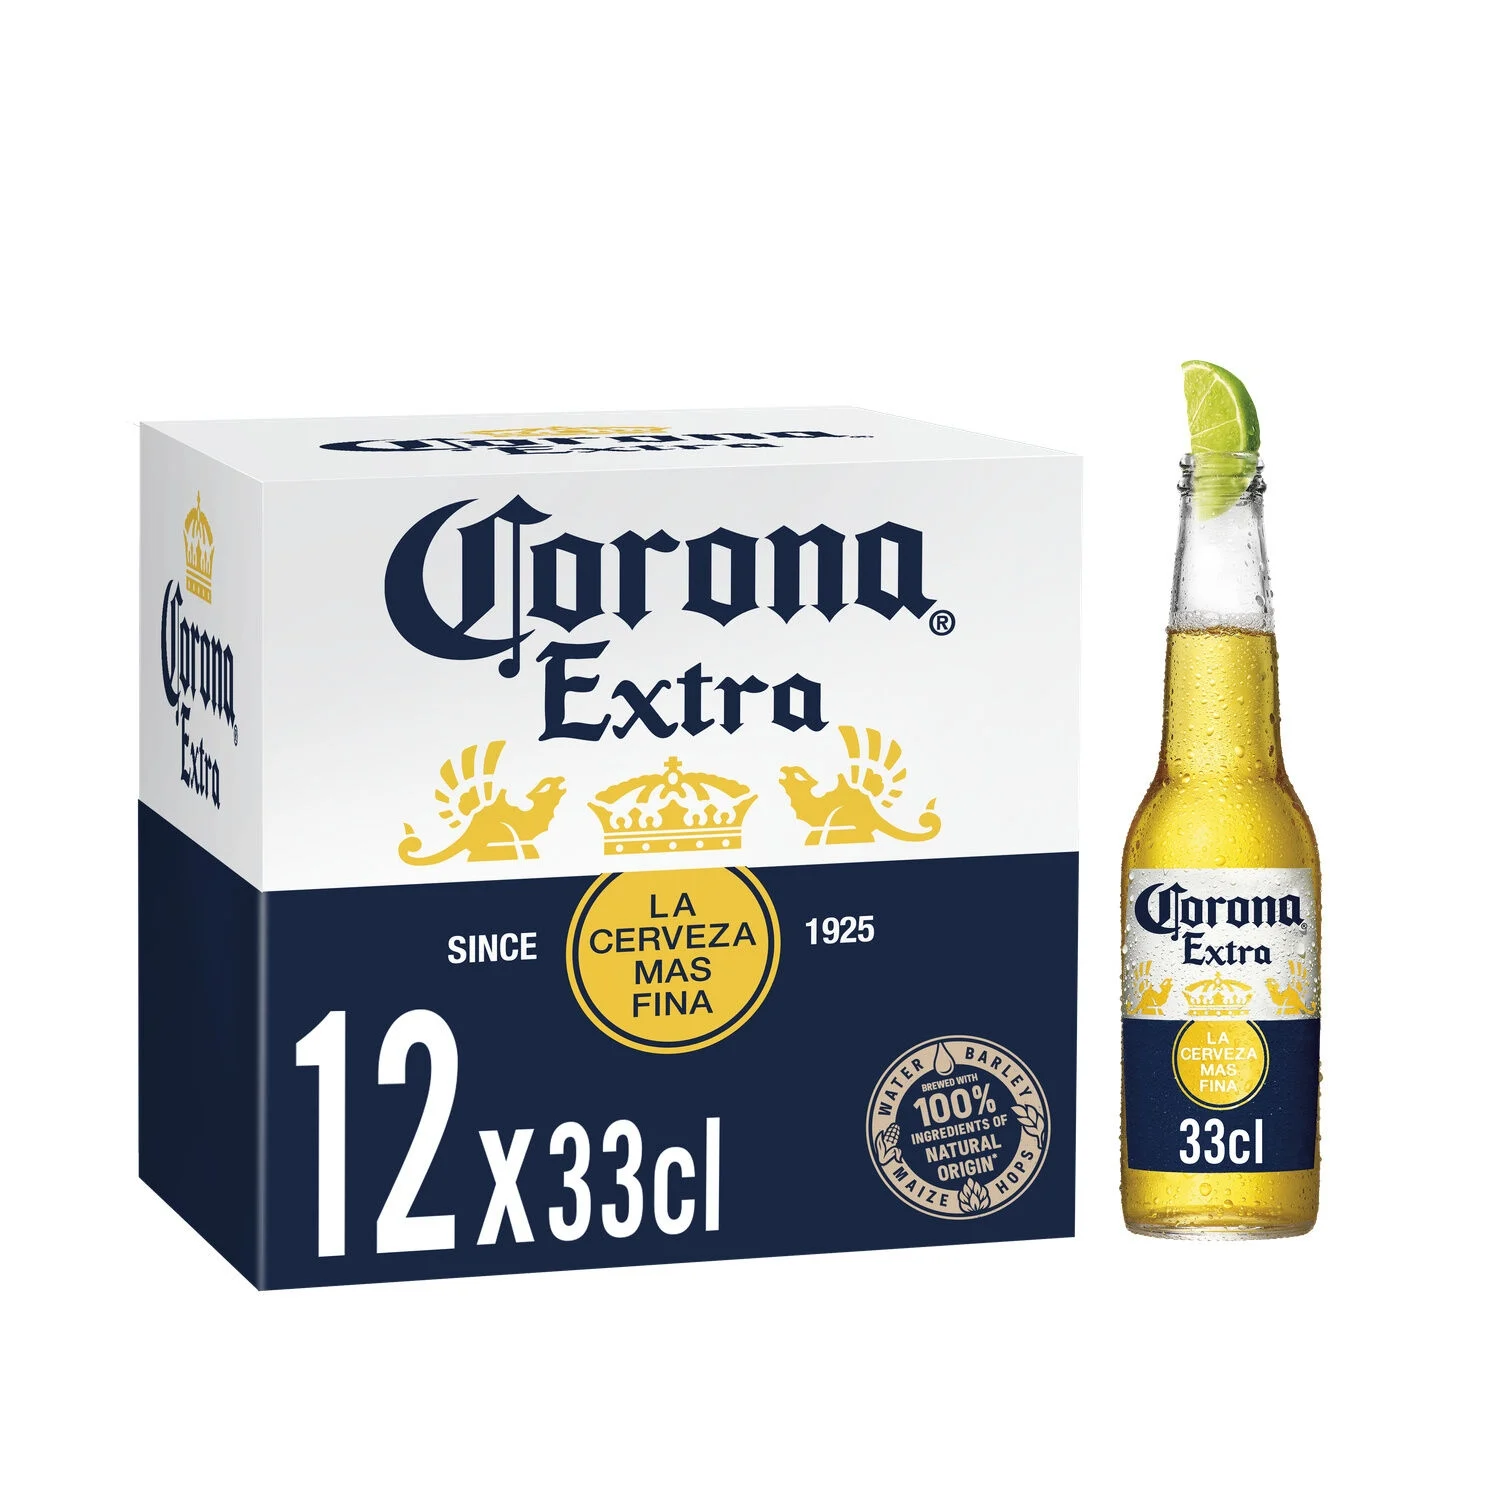 12x33cl Biere Corona 4 5